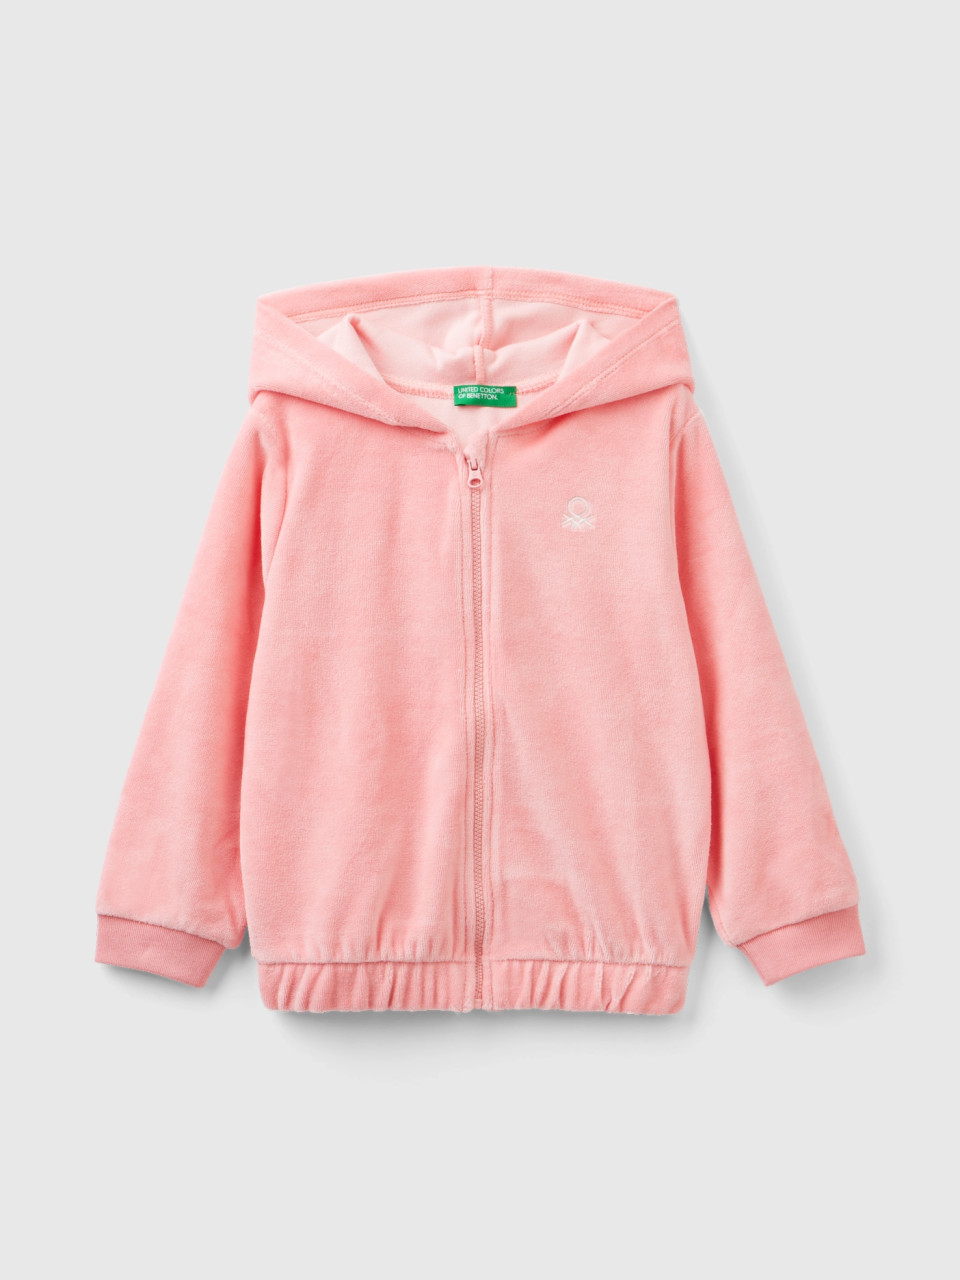 Benetton, Chenille Sweatshirt With Zip And Hood, Pink, Kids